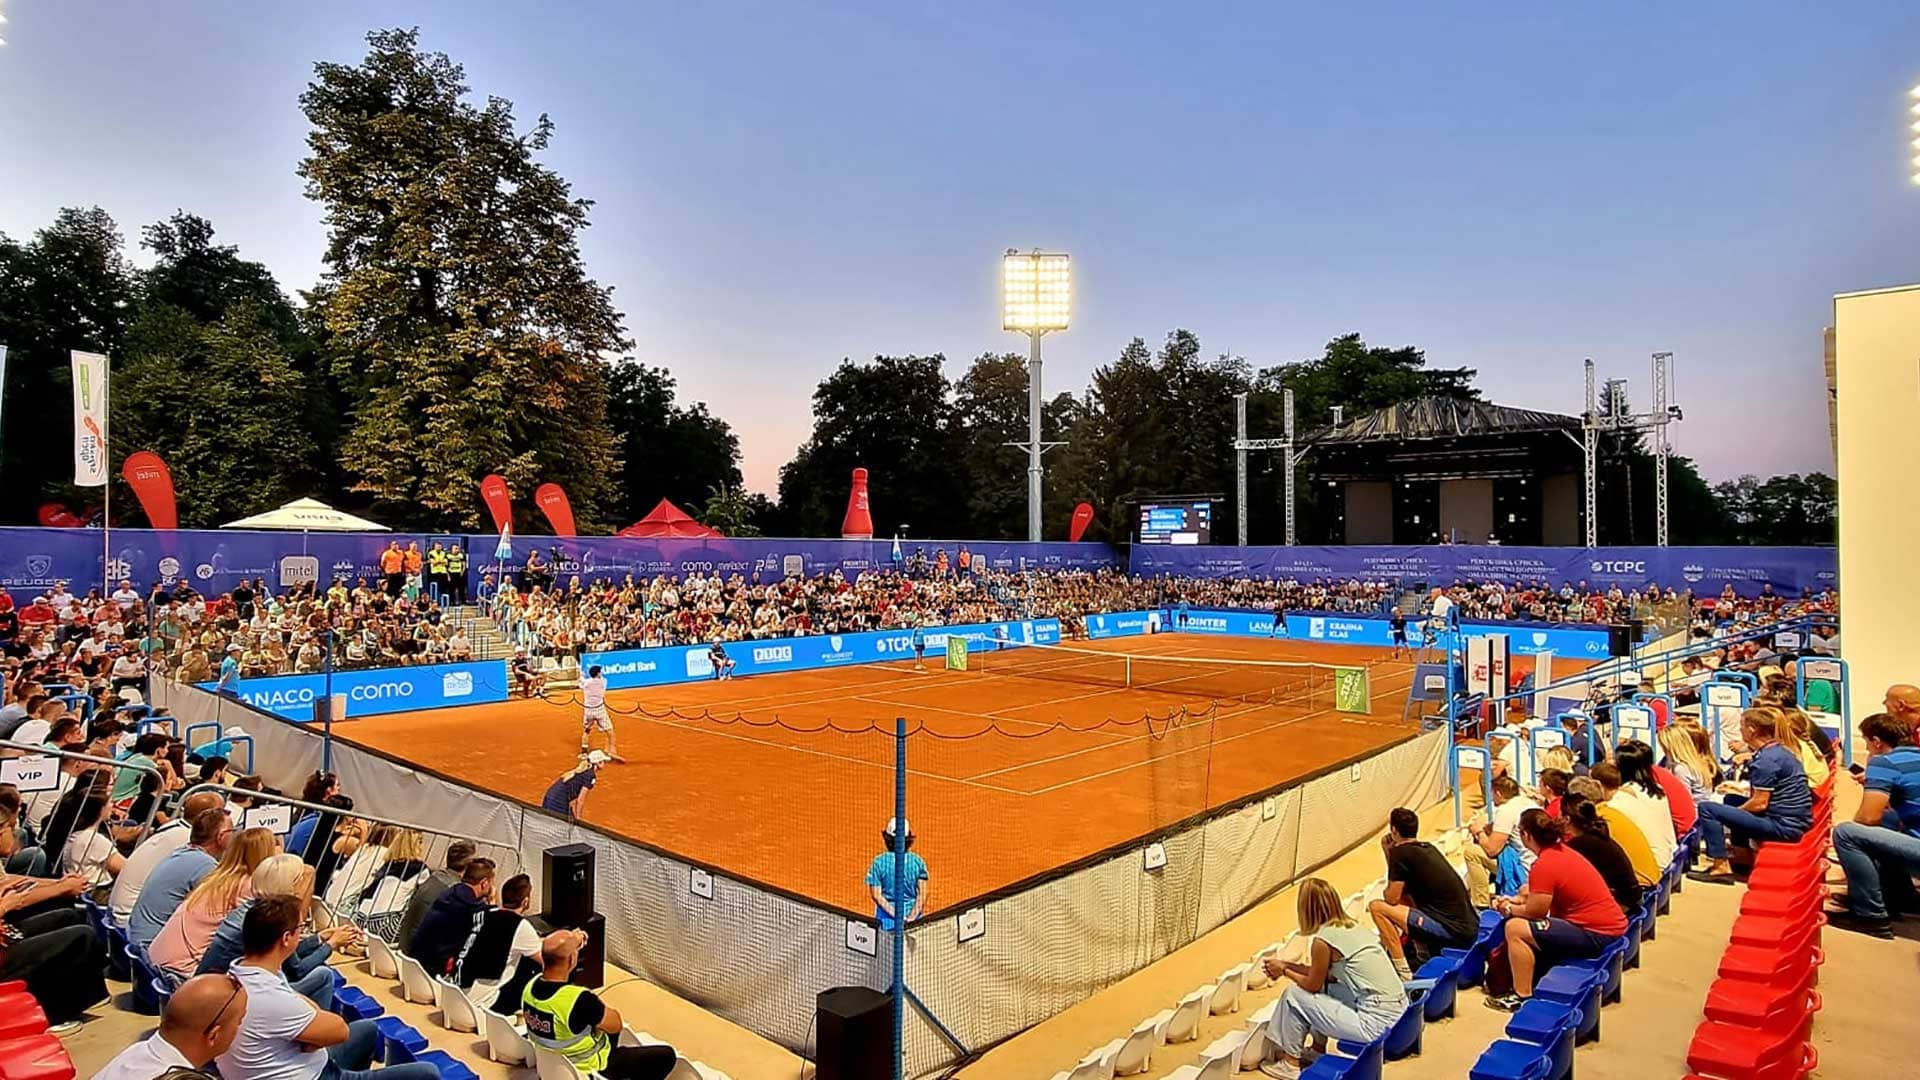 Teniski turnir “Banjaluka open” od 7. do 13. avgusta